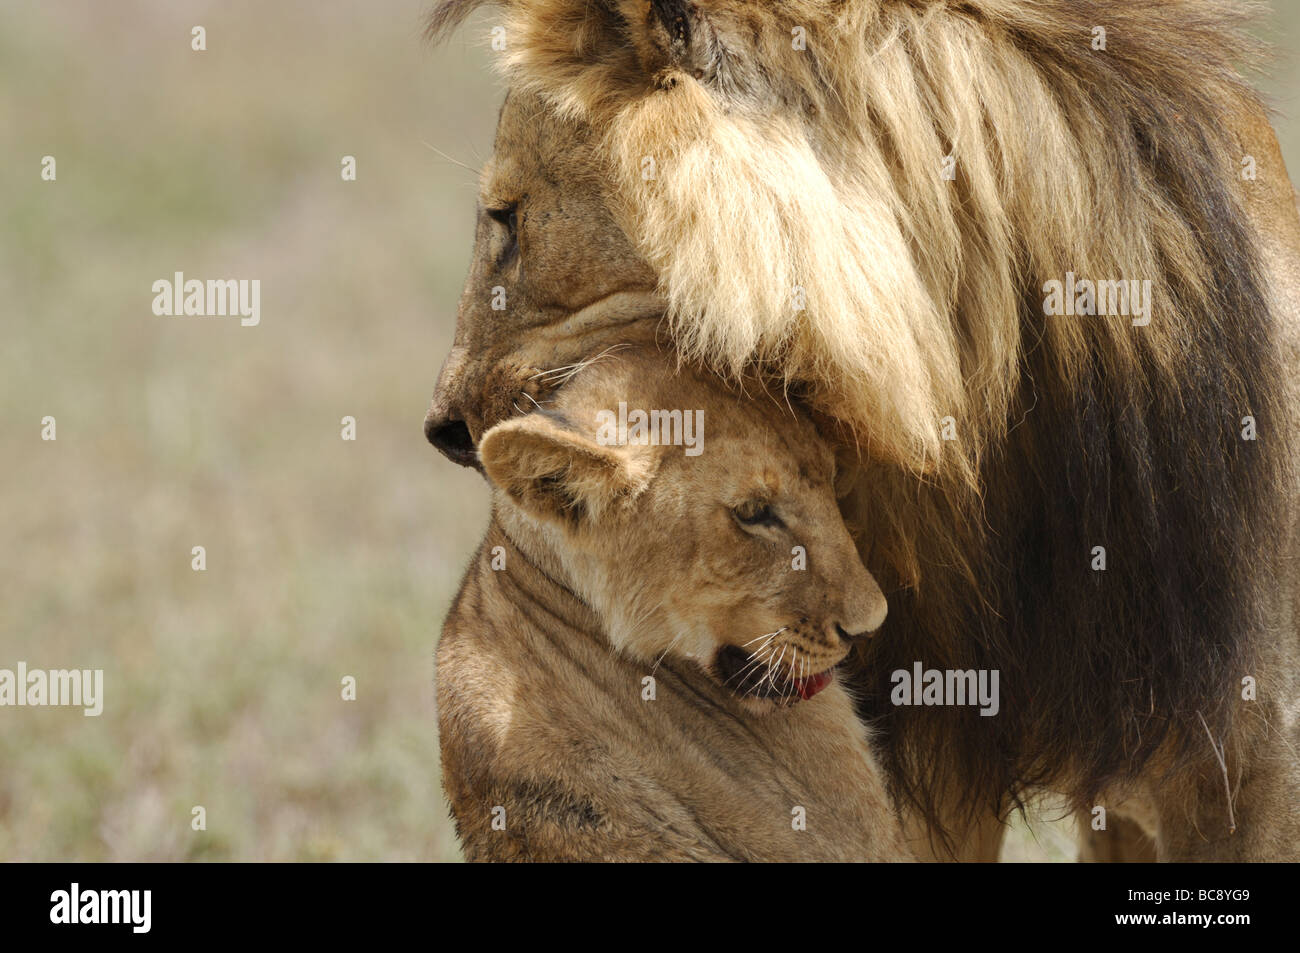 Stock photo of a large male lion attacking and killing a cub, Ndutu, Tanzania, February 2009. Stock Photo